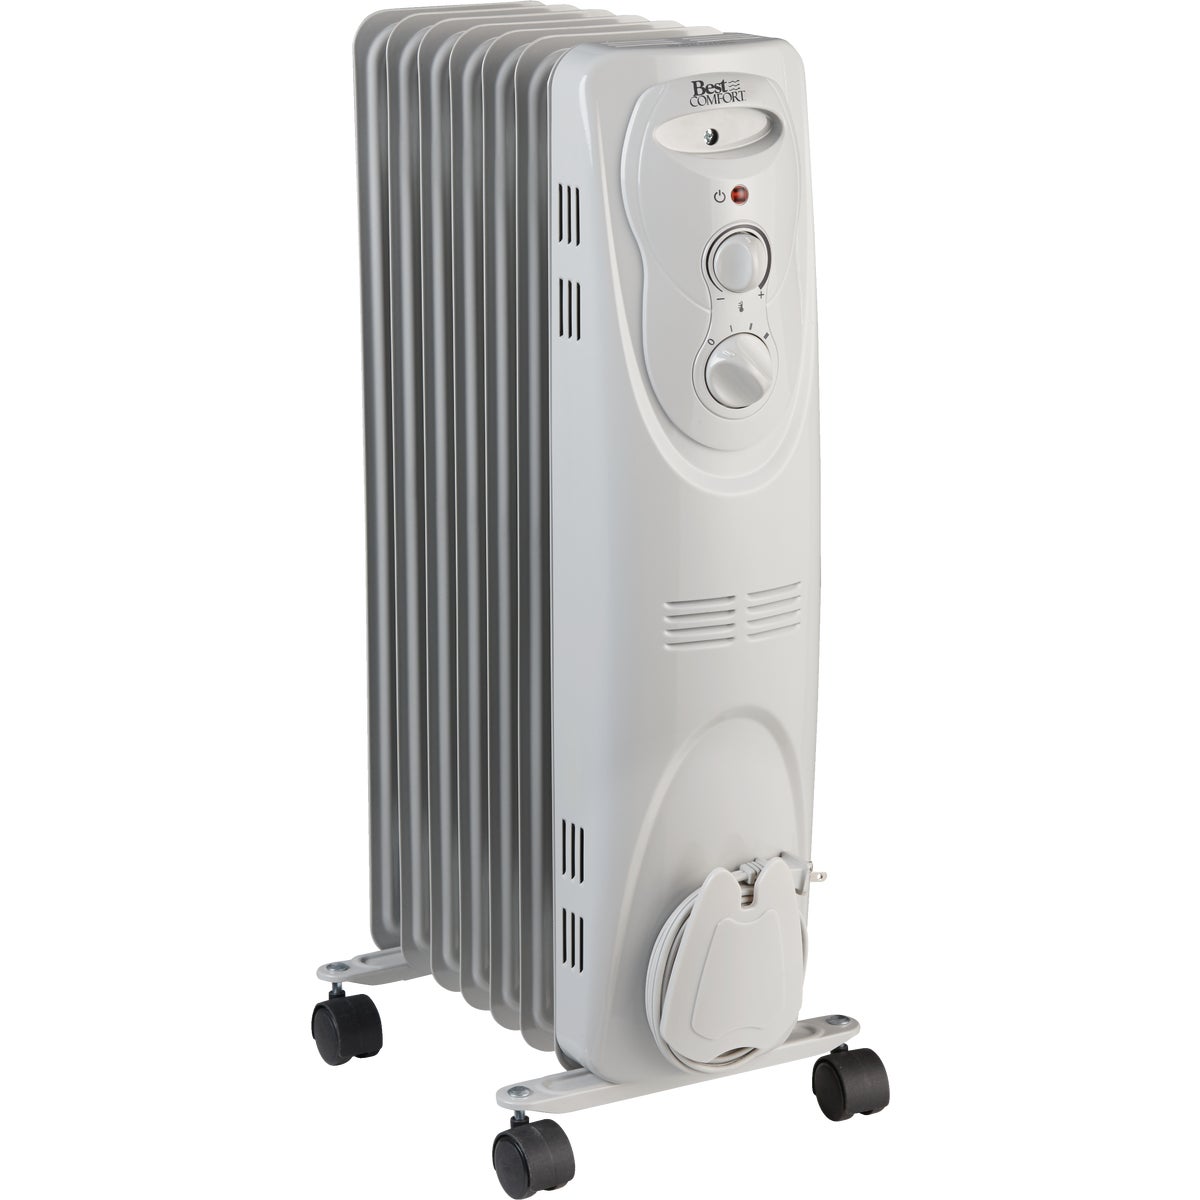 Item 435470, 7-fin oil-filled radiator heater.